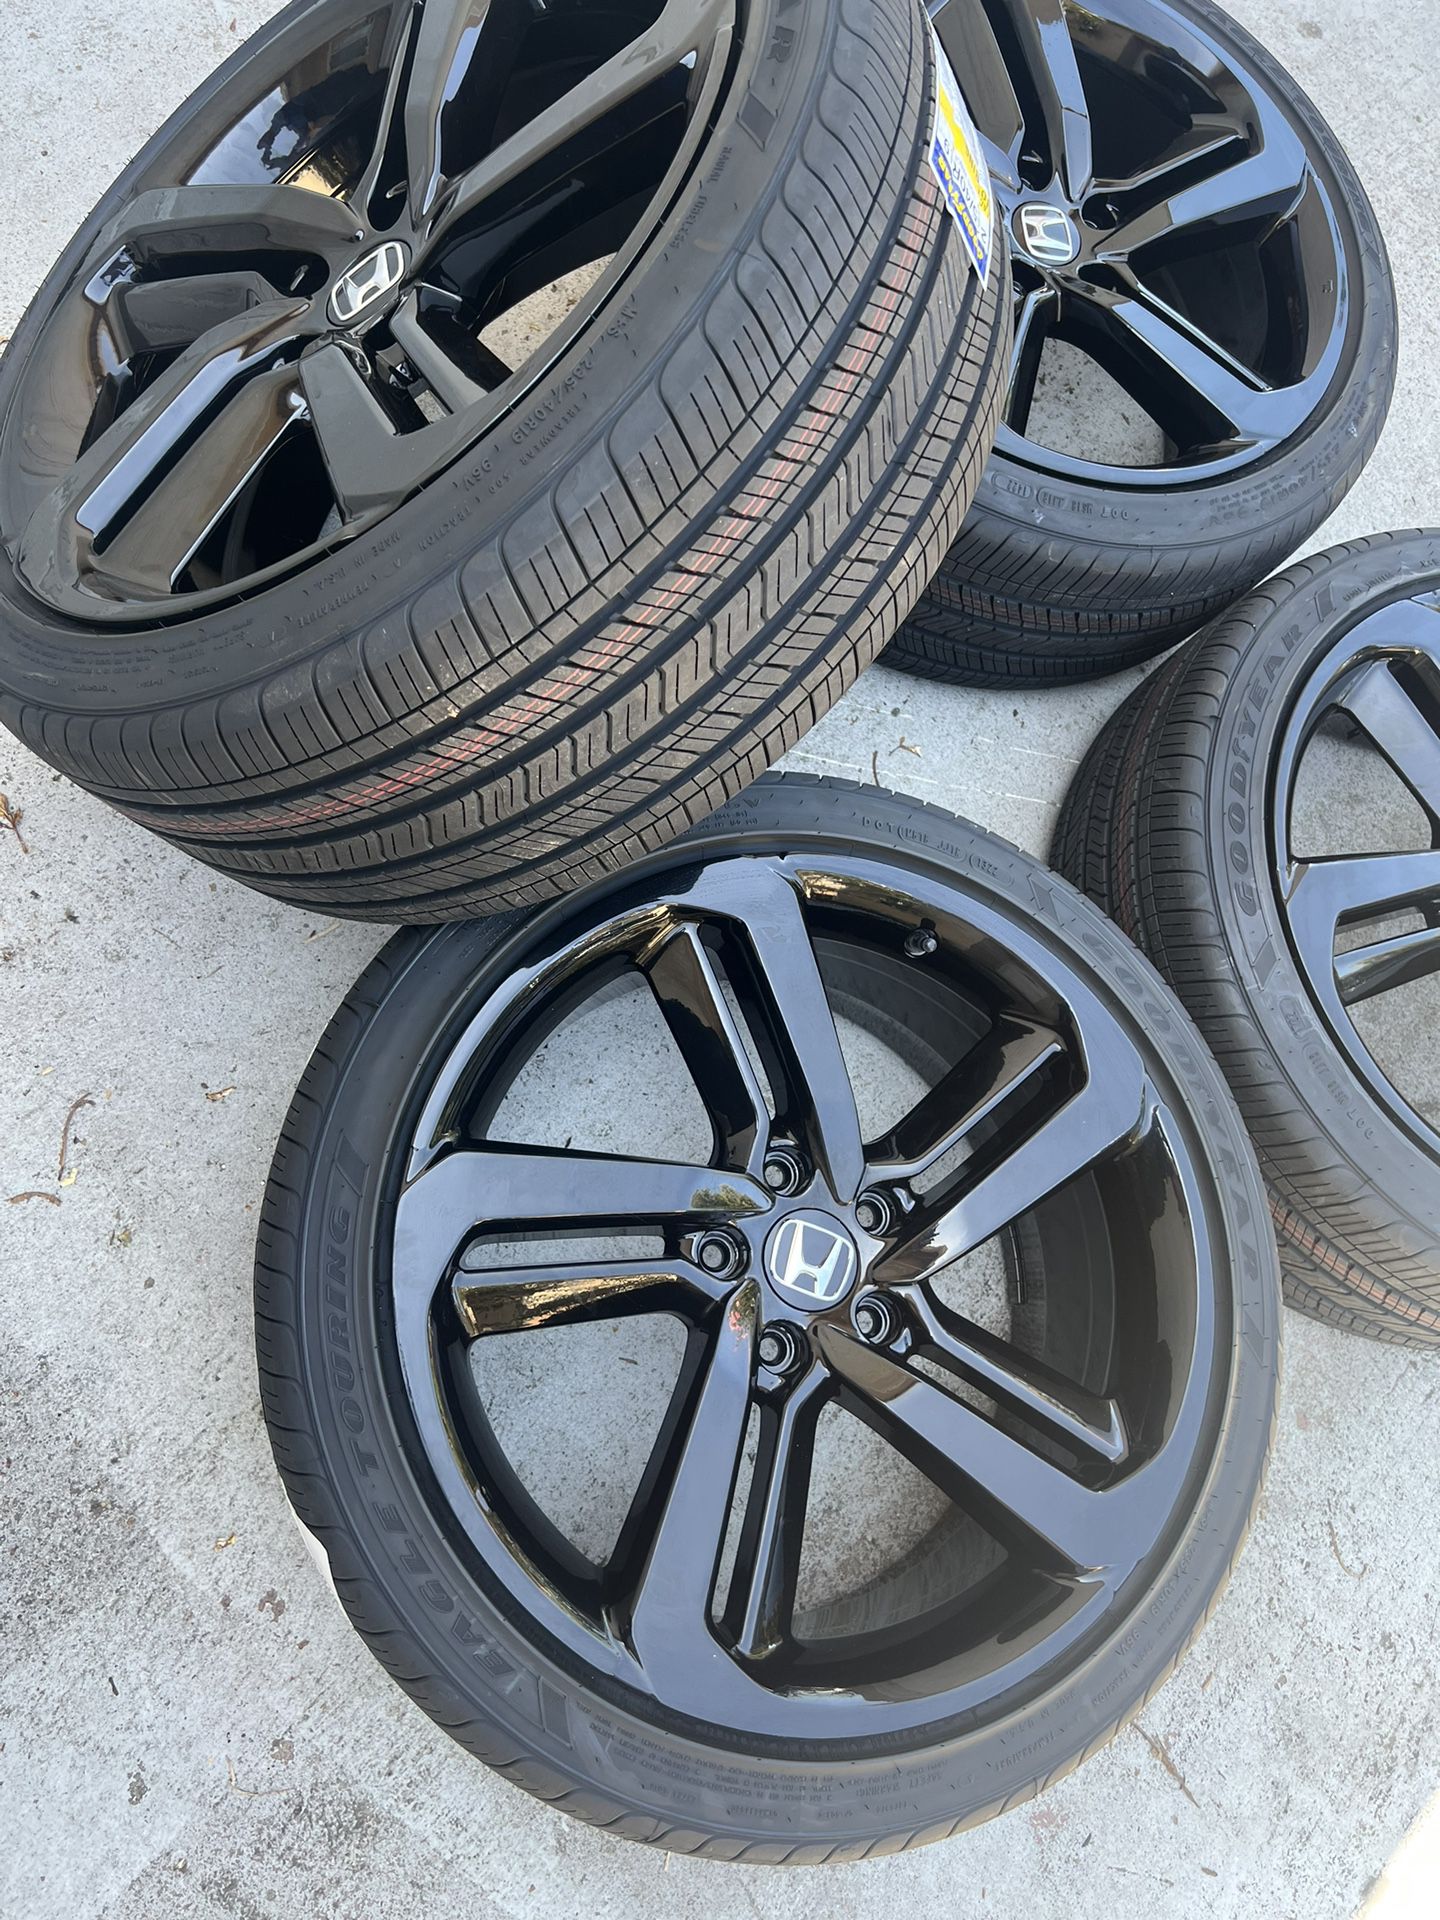 Honda Accord Rims 19” New Goodyear Tires Rines Y Llantas Nuevas OEM Factory Wheels Fits Accord Civic CRV New Gloss Black 